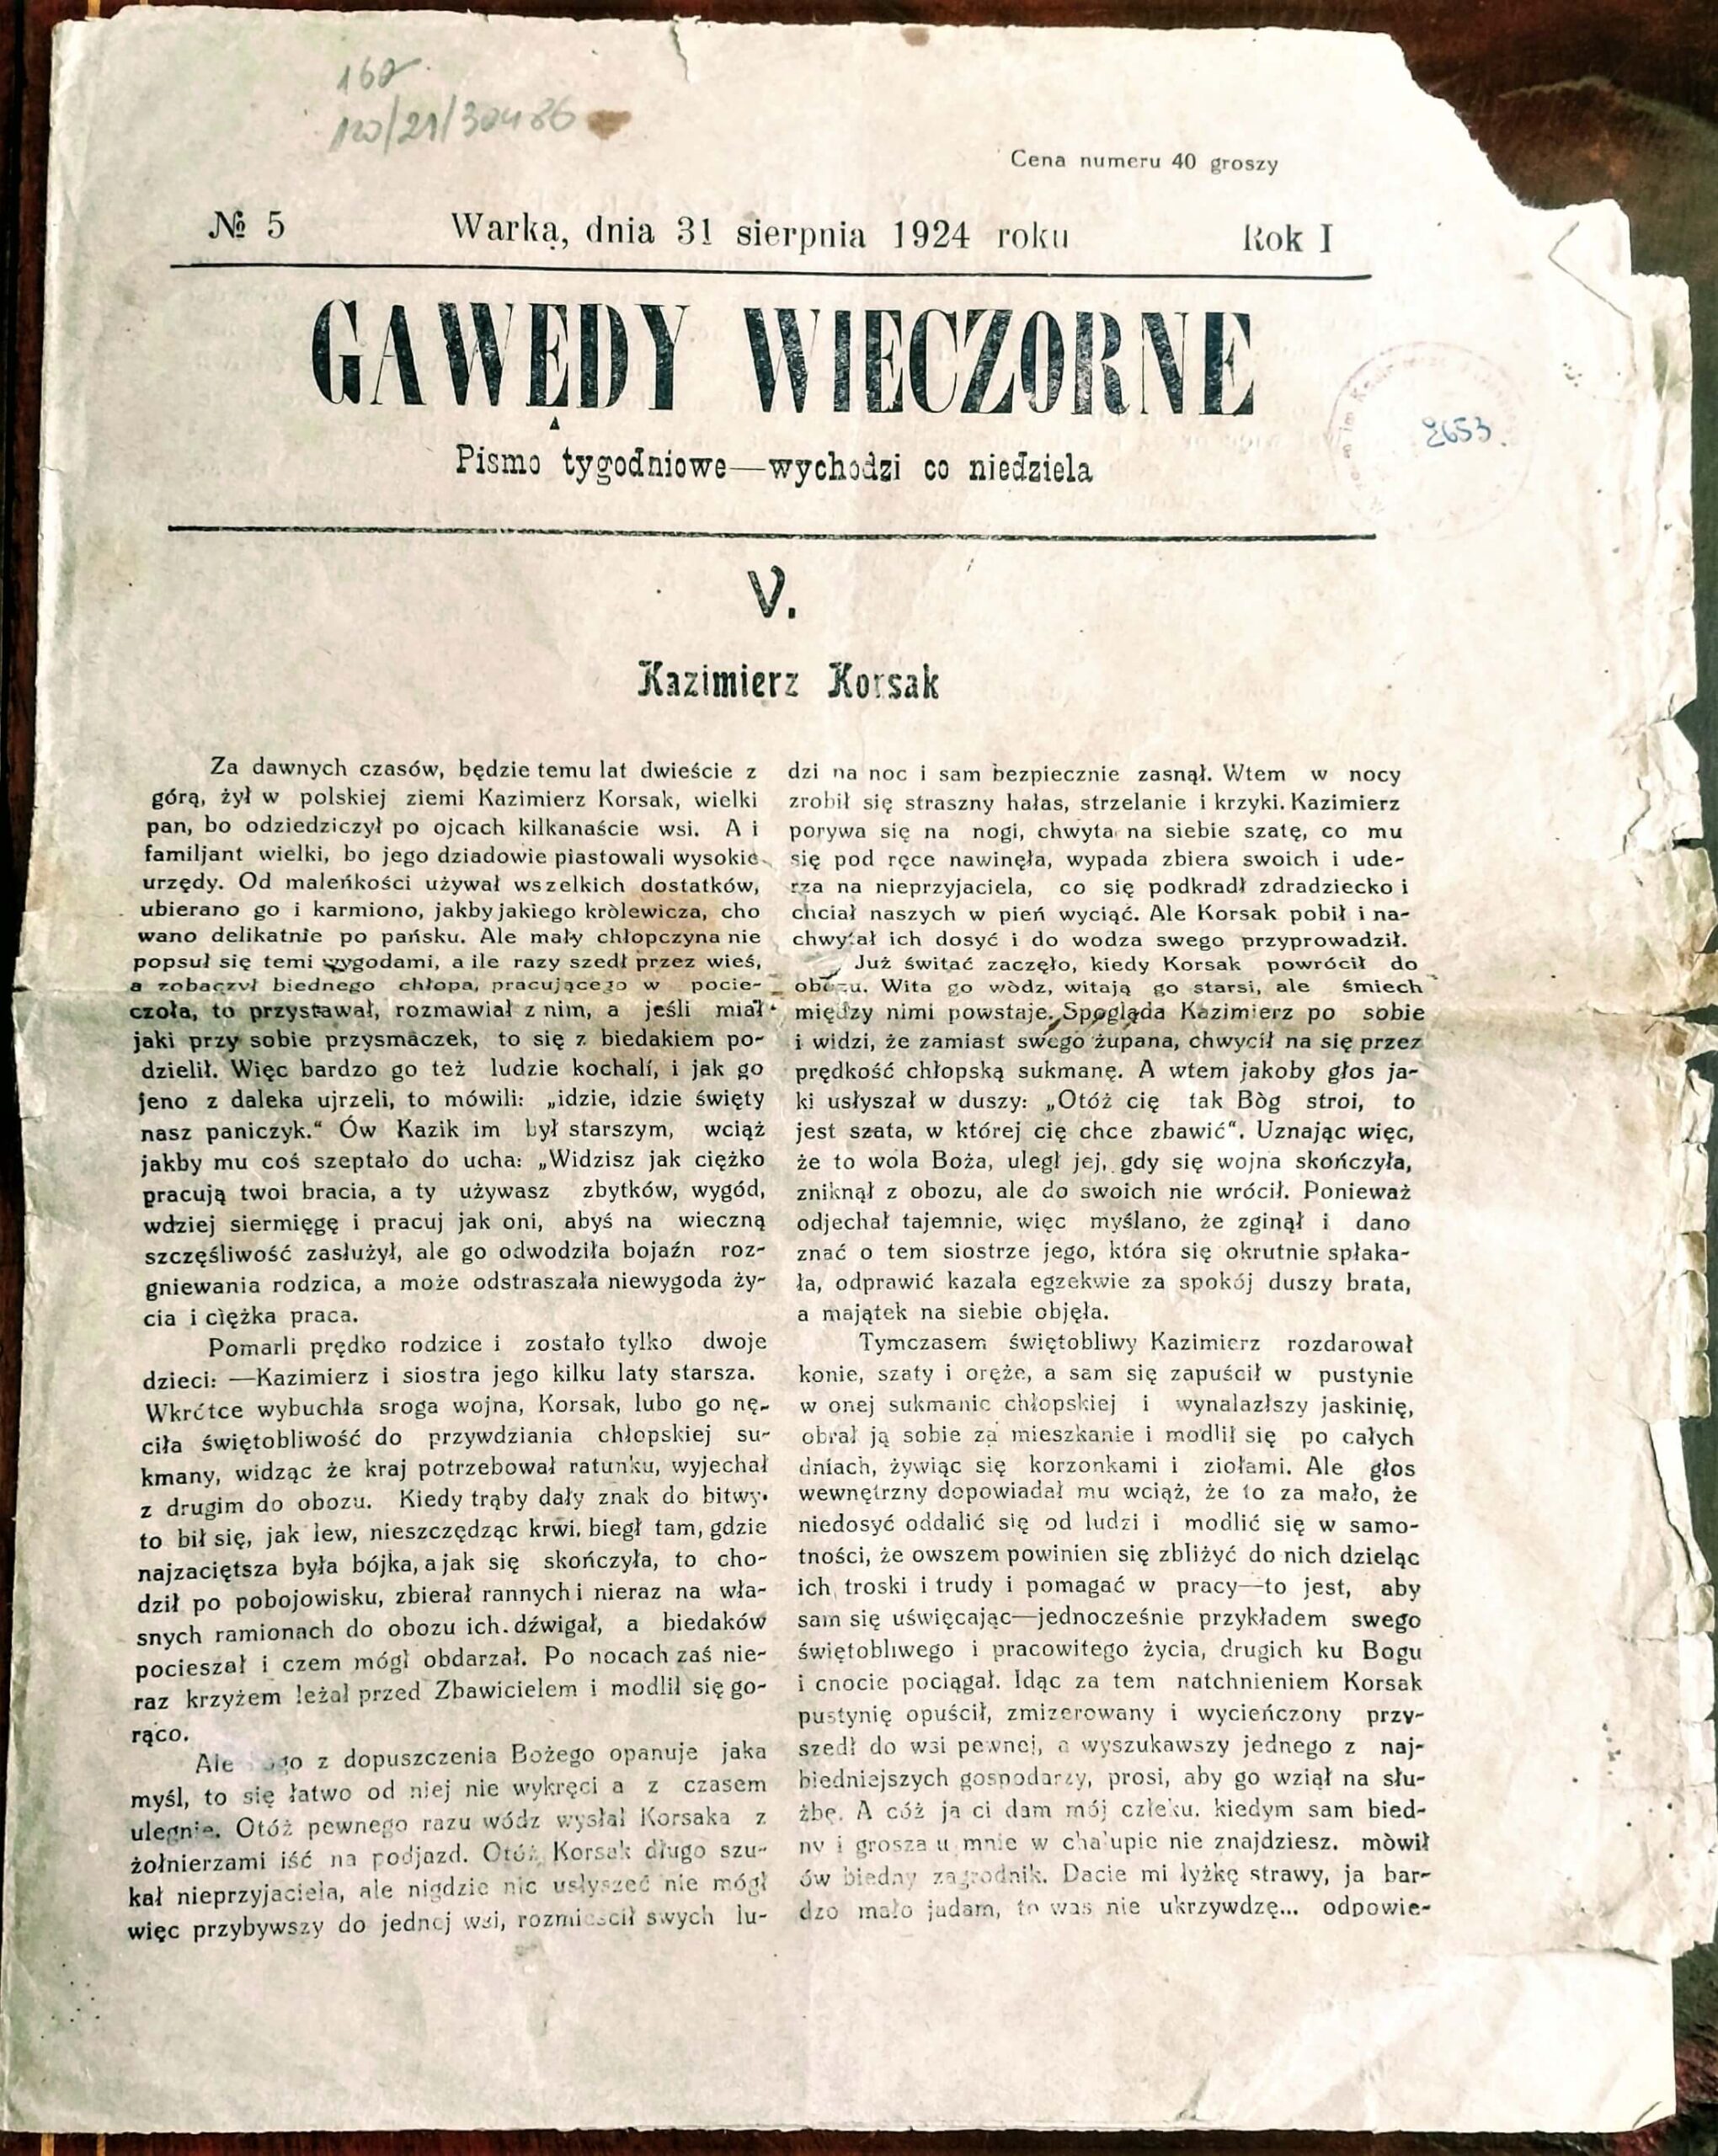 Gawędy Wieczorne (Evening Stories), first issue